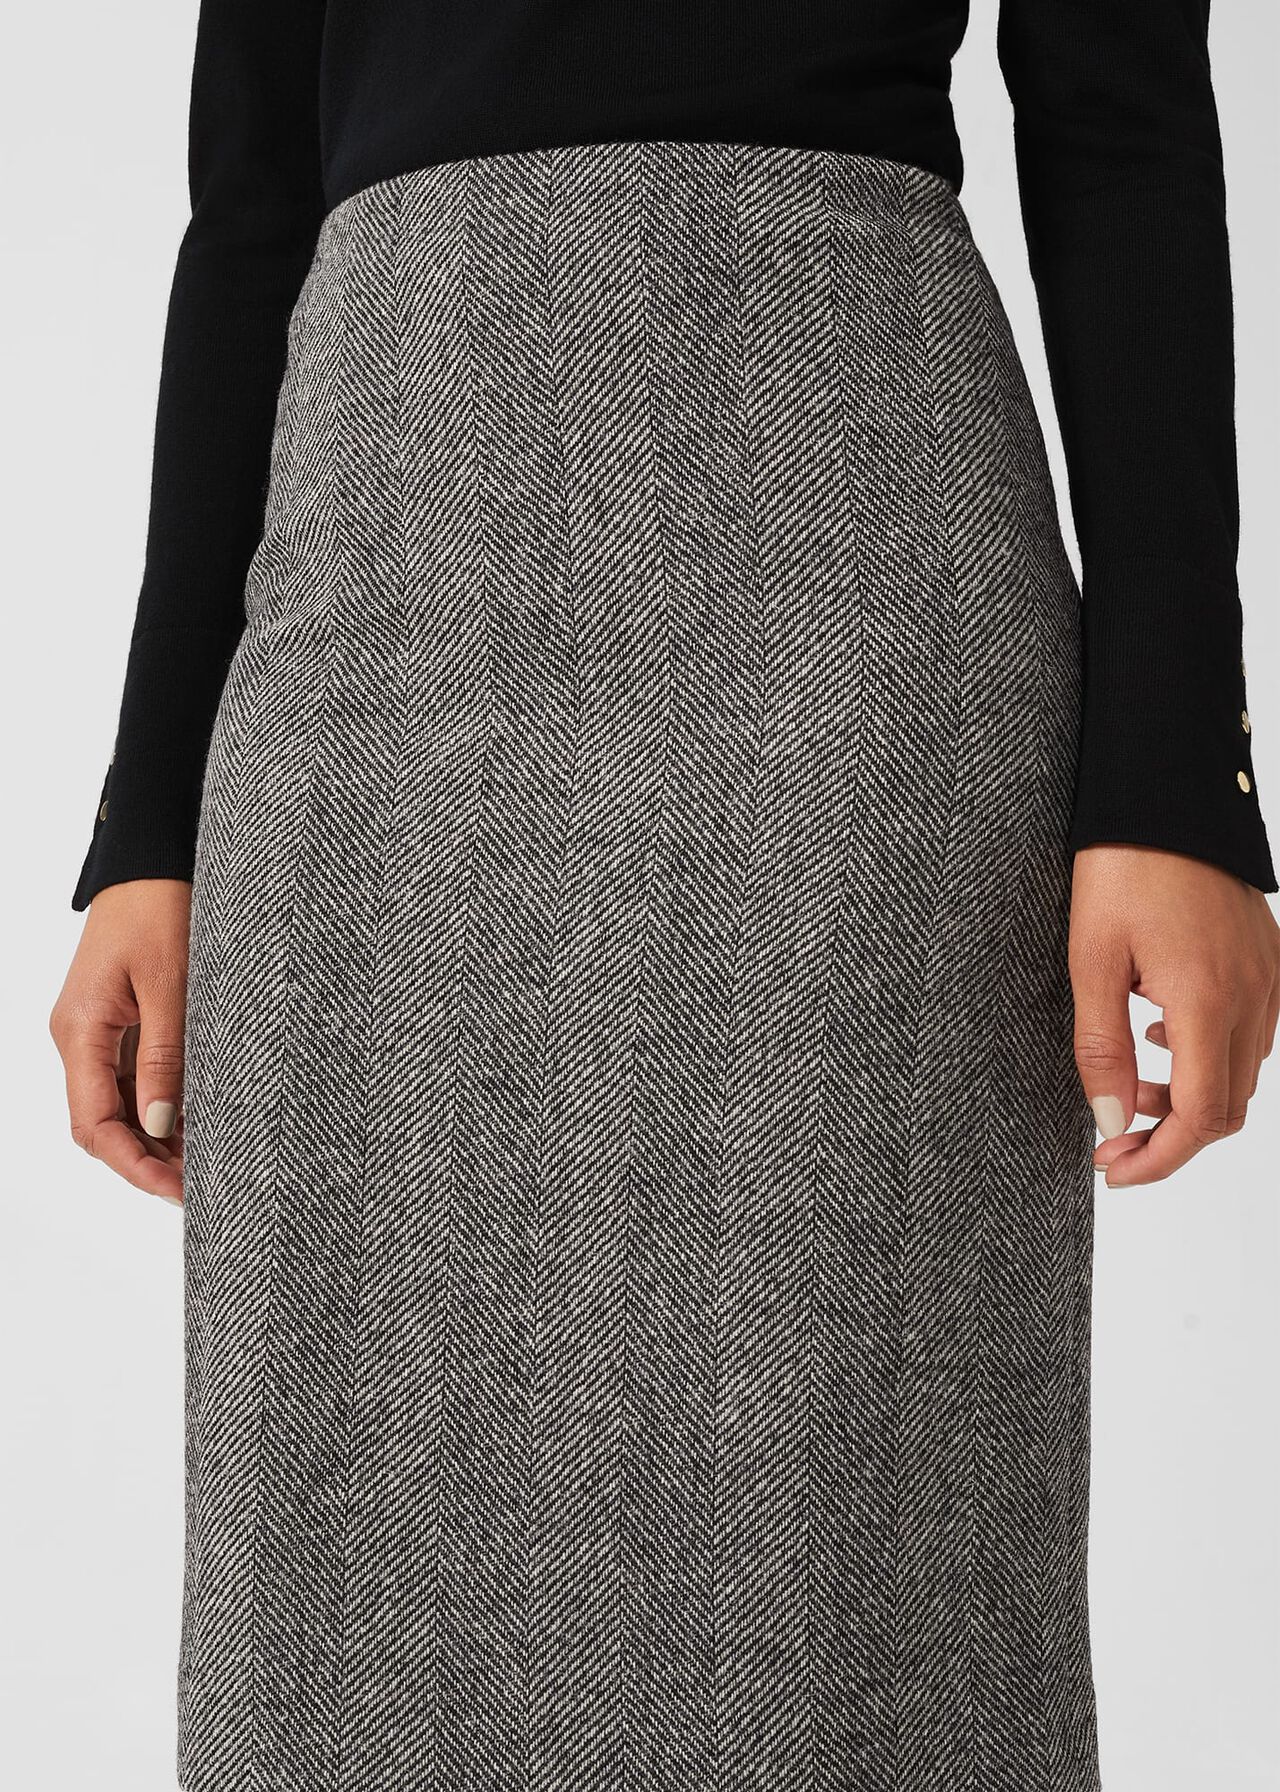 Daphne Wool Skirt, Black Ivory, hi-res